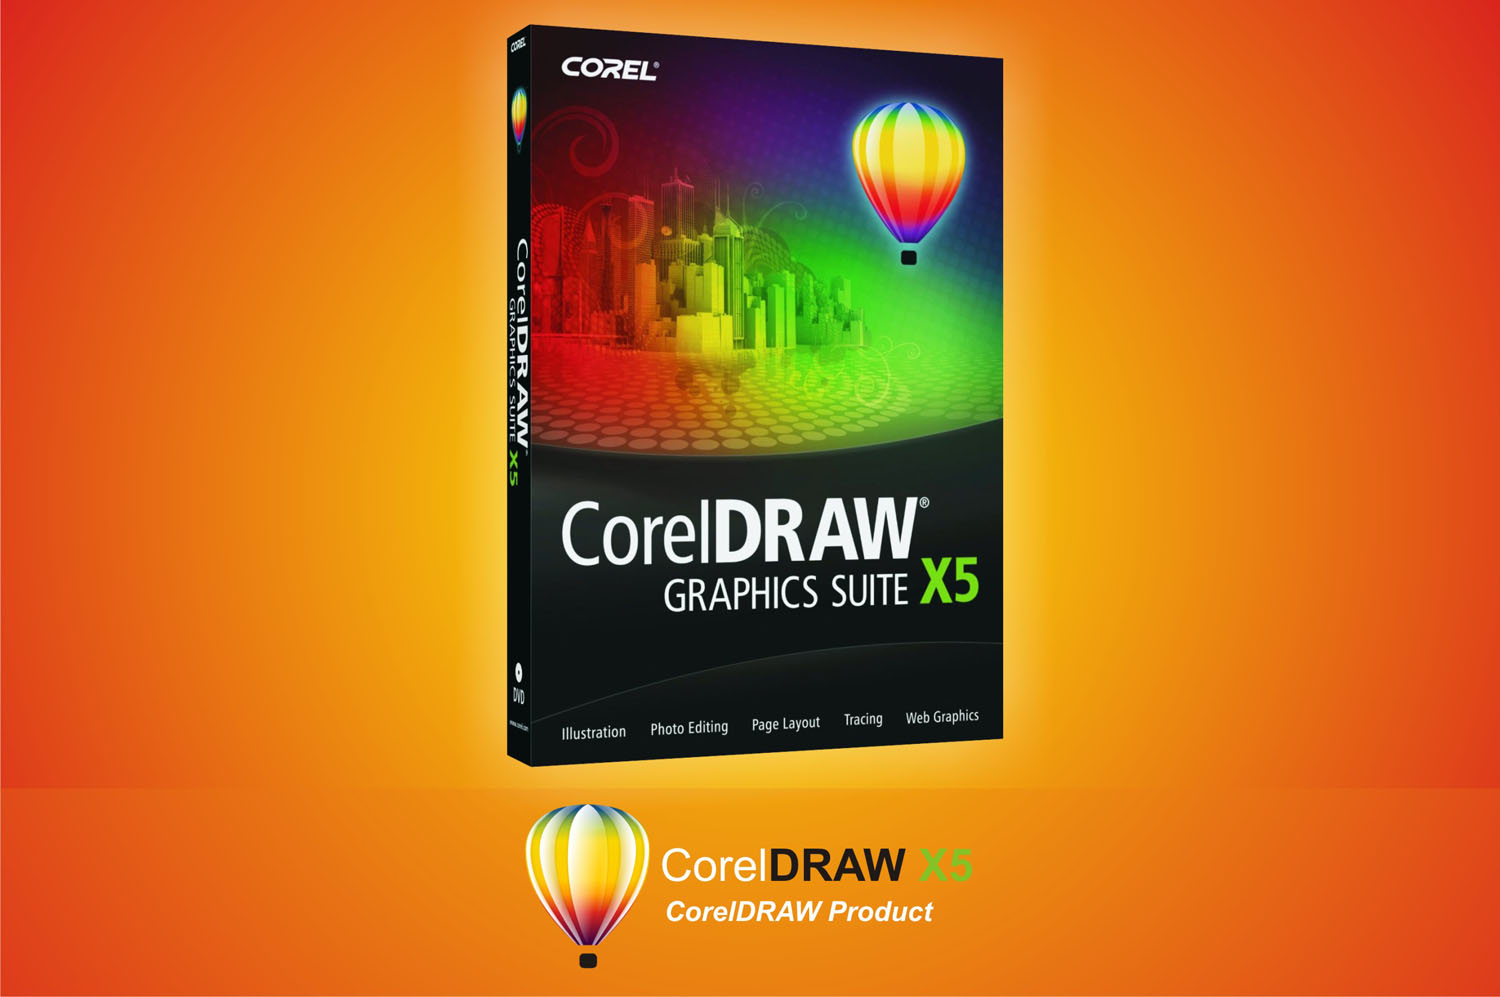 coreldraw graphics suite x5 free trial download